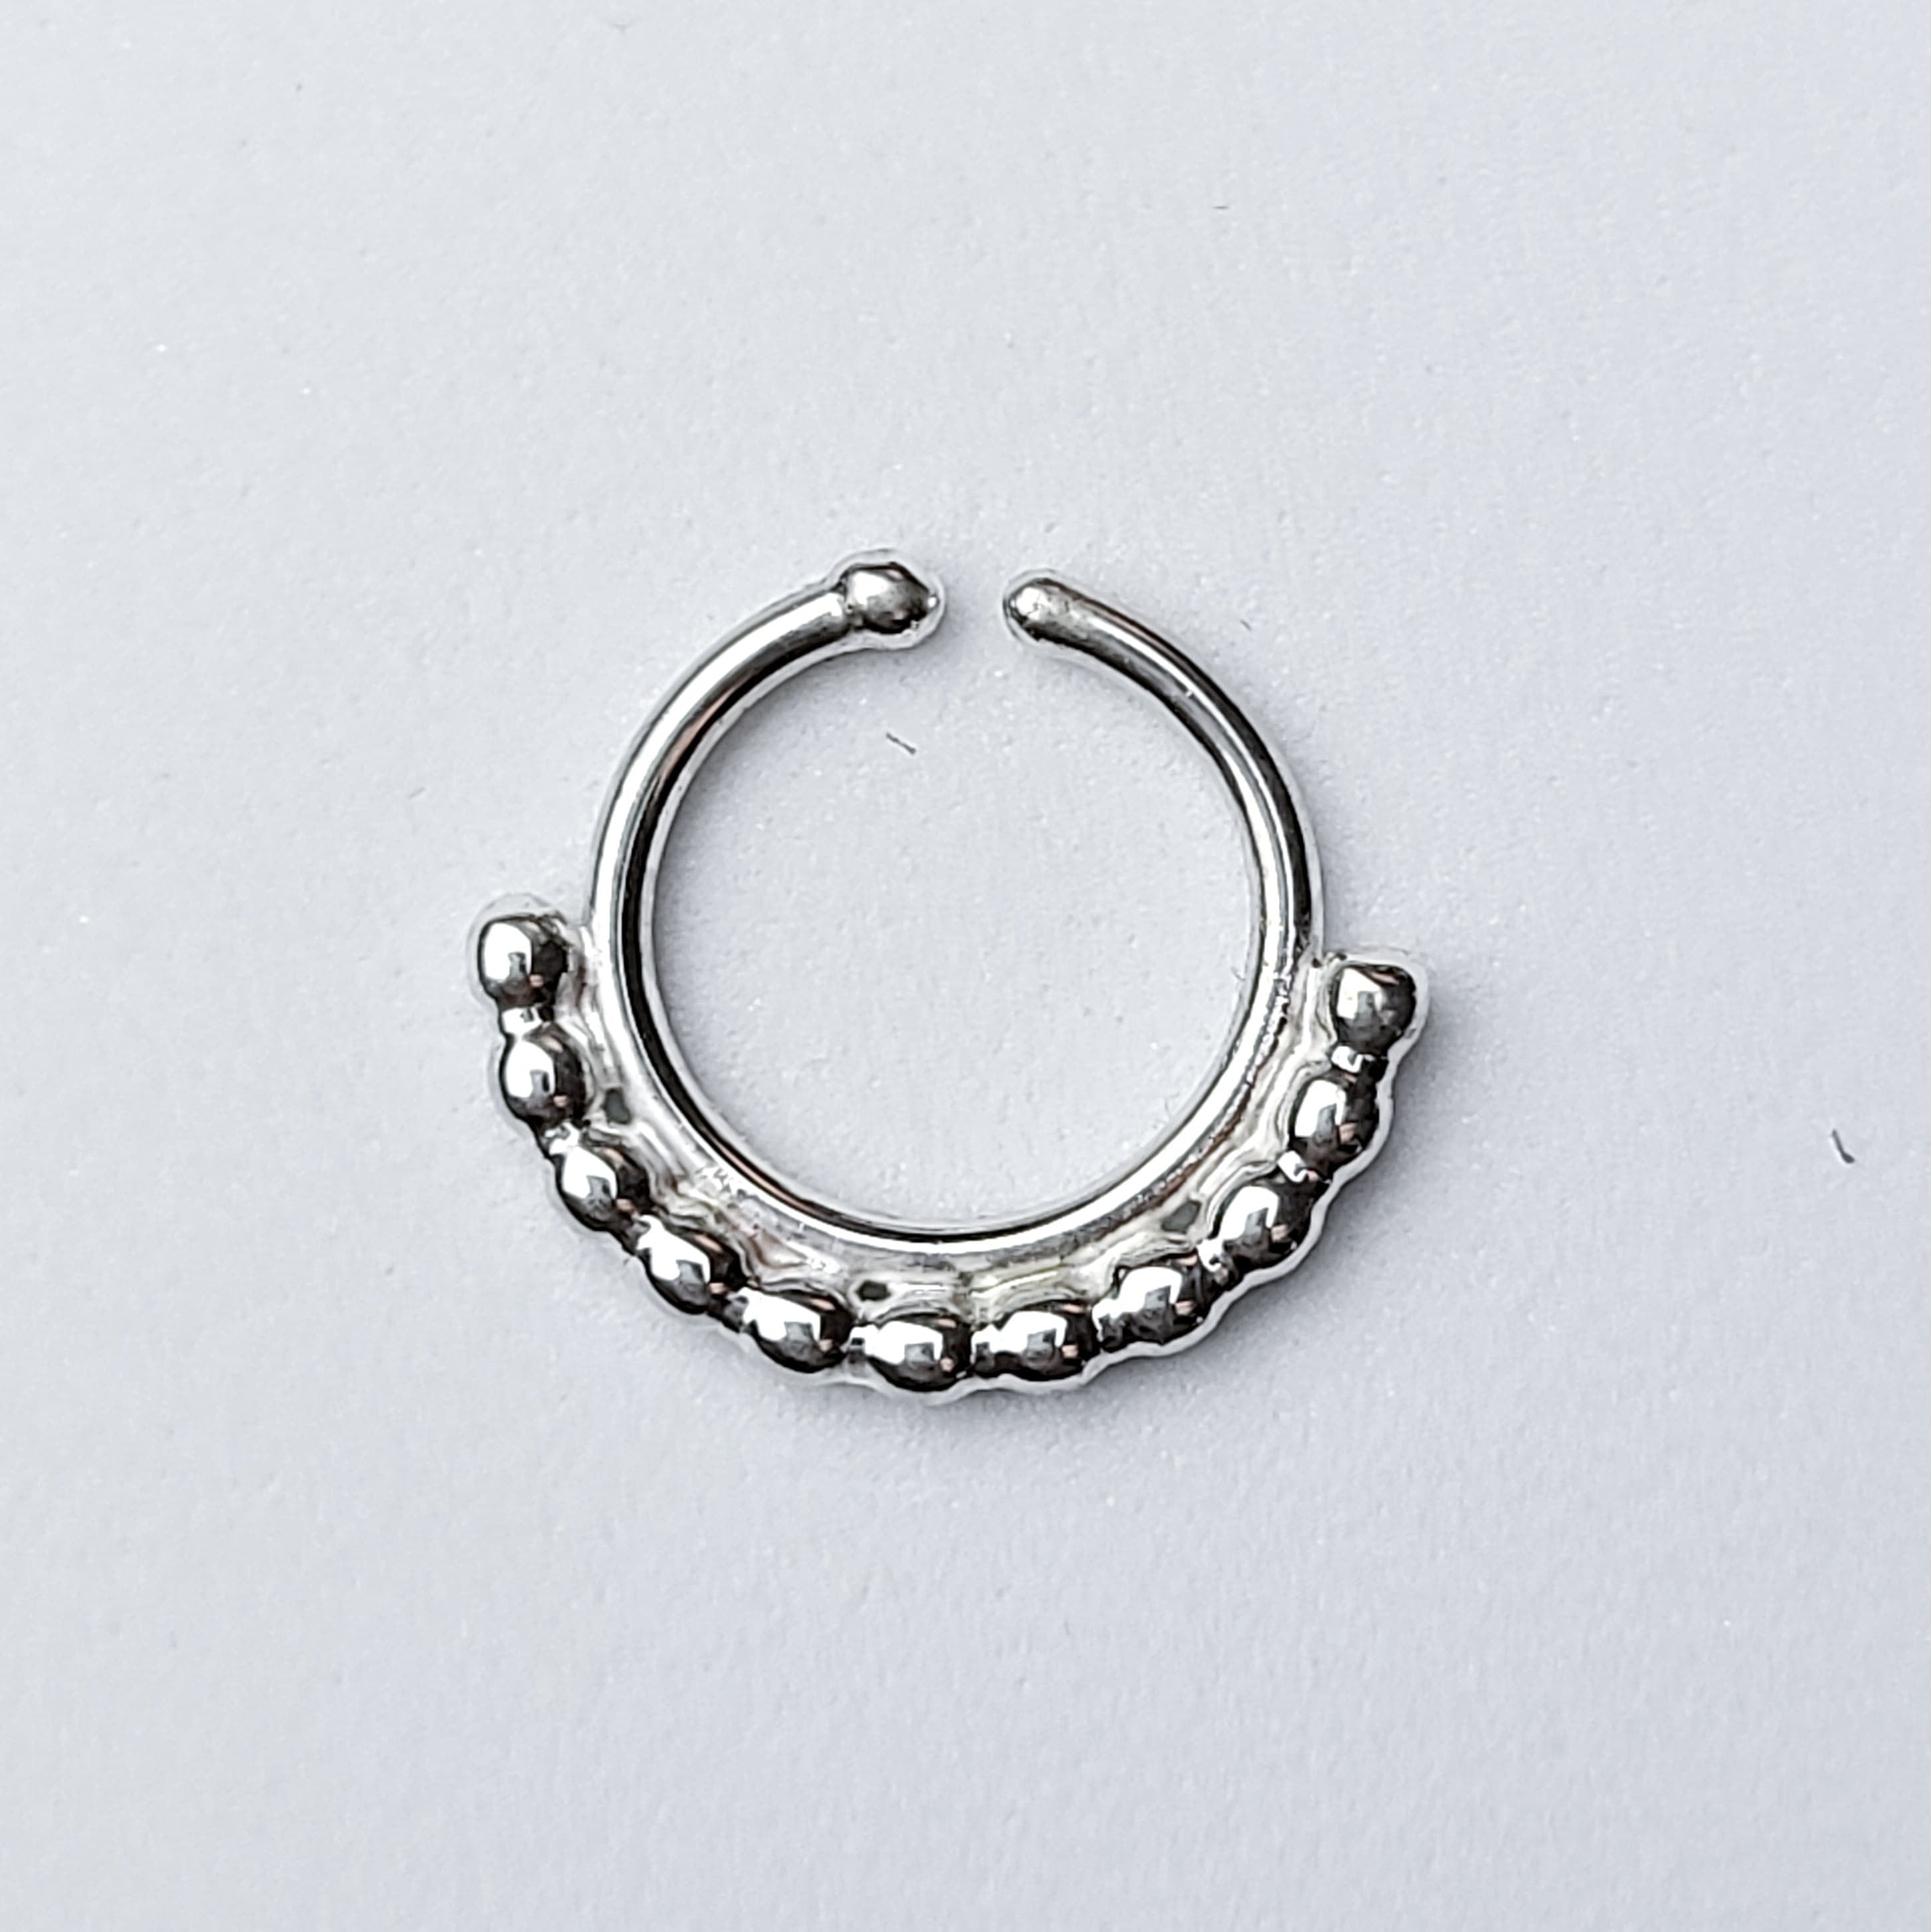 Fake Piercing - Fake Nose ring - Tragus Earring - Ear Cuff - Sterling Silver  | eBay